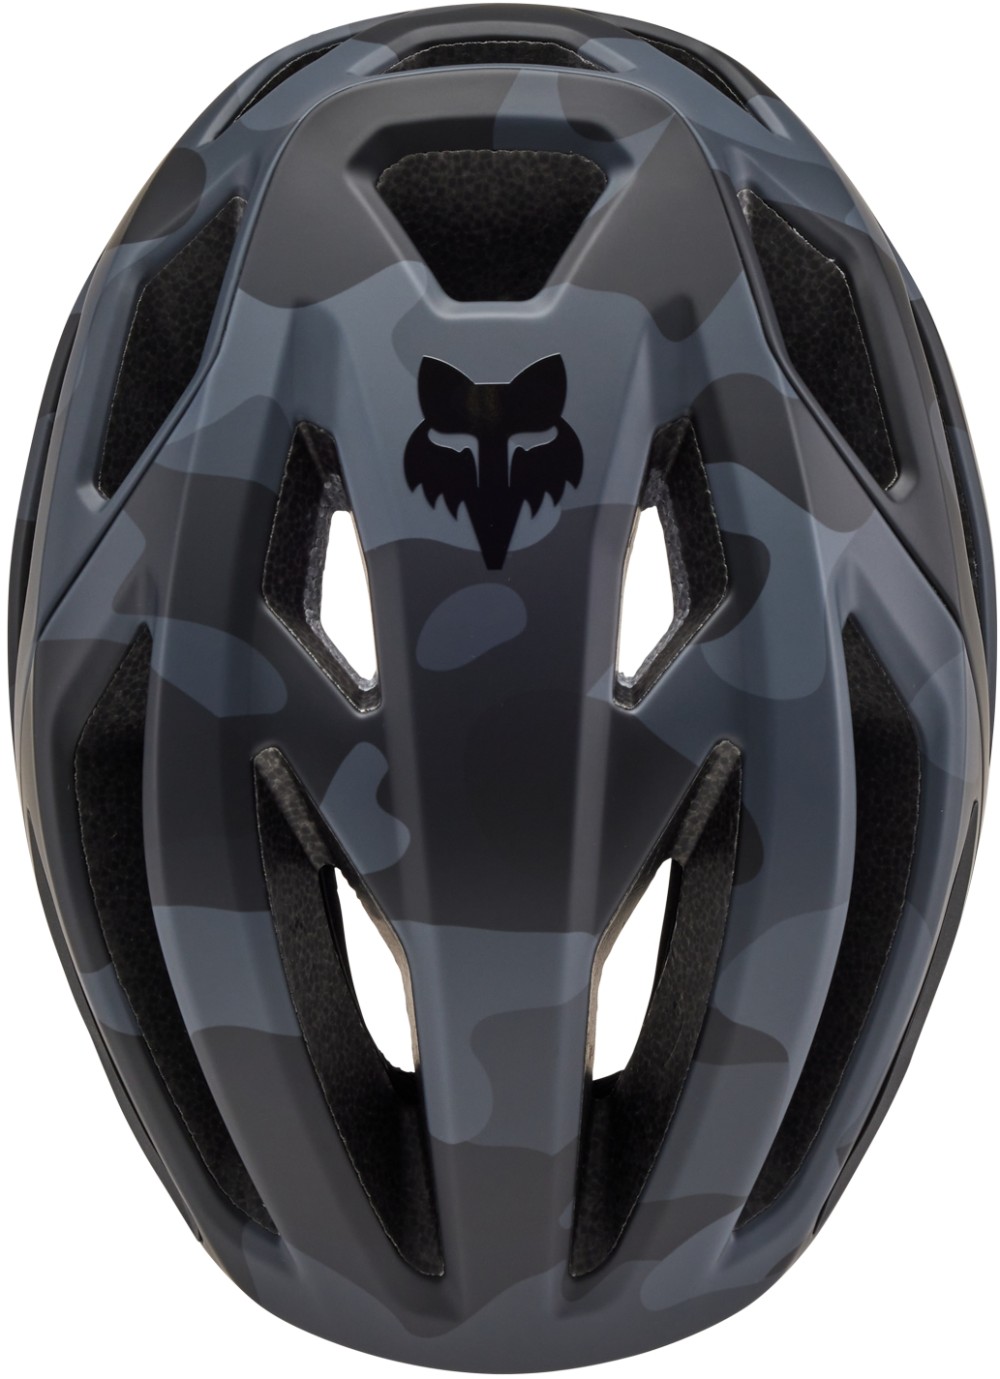 Crossframe Pro Camo Mips MTB  Helmet image 2